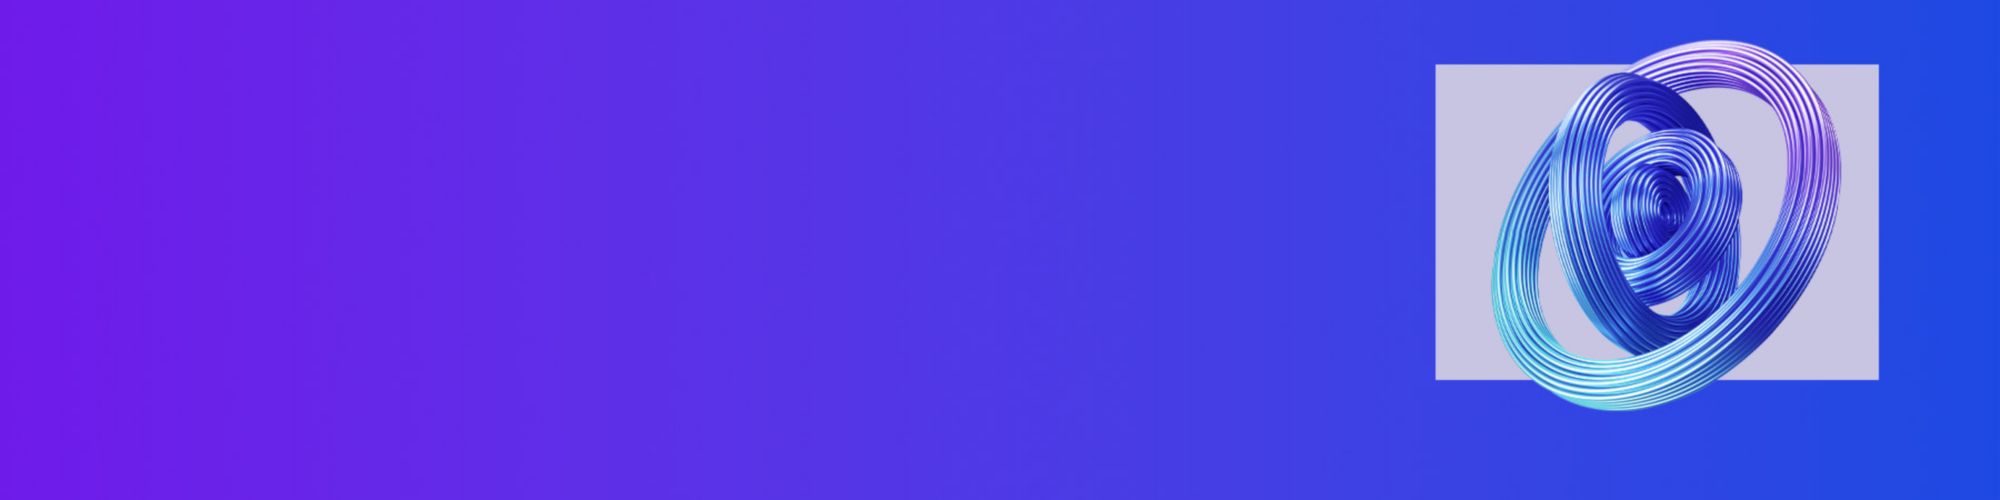 id-blue-purple-swirl-banner